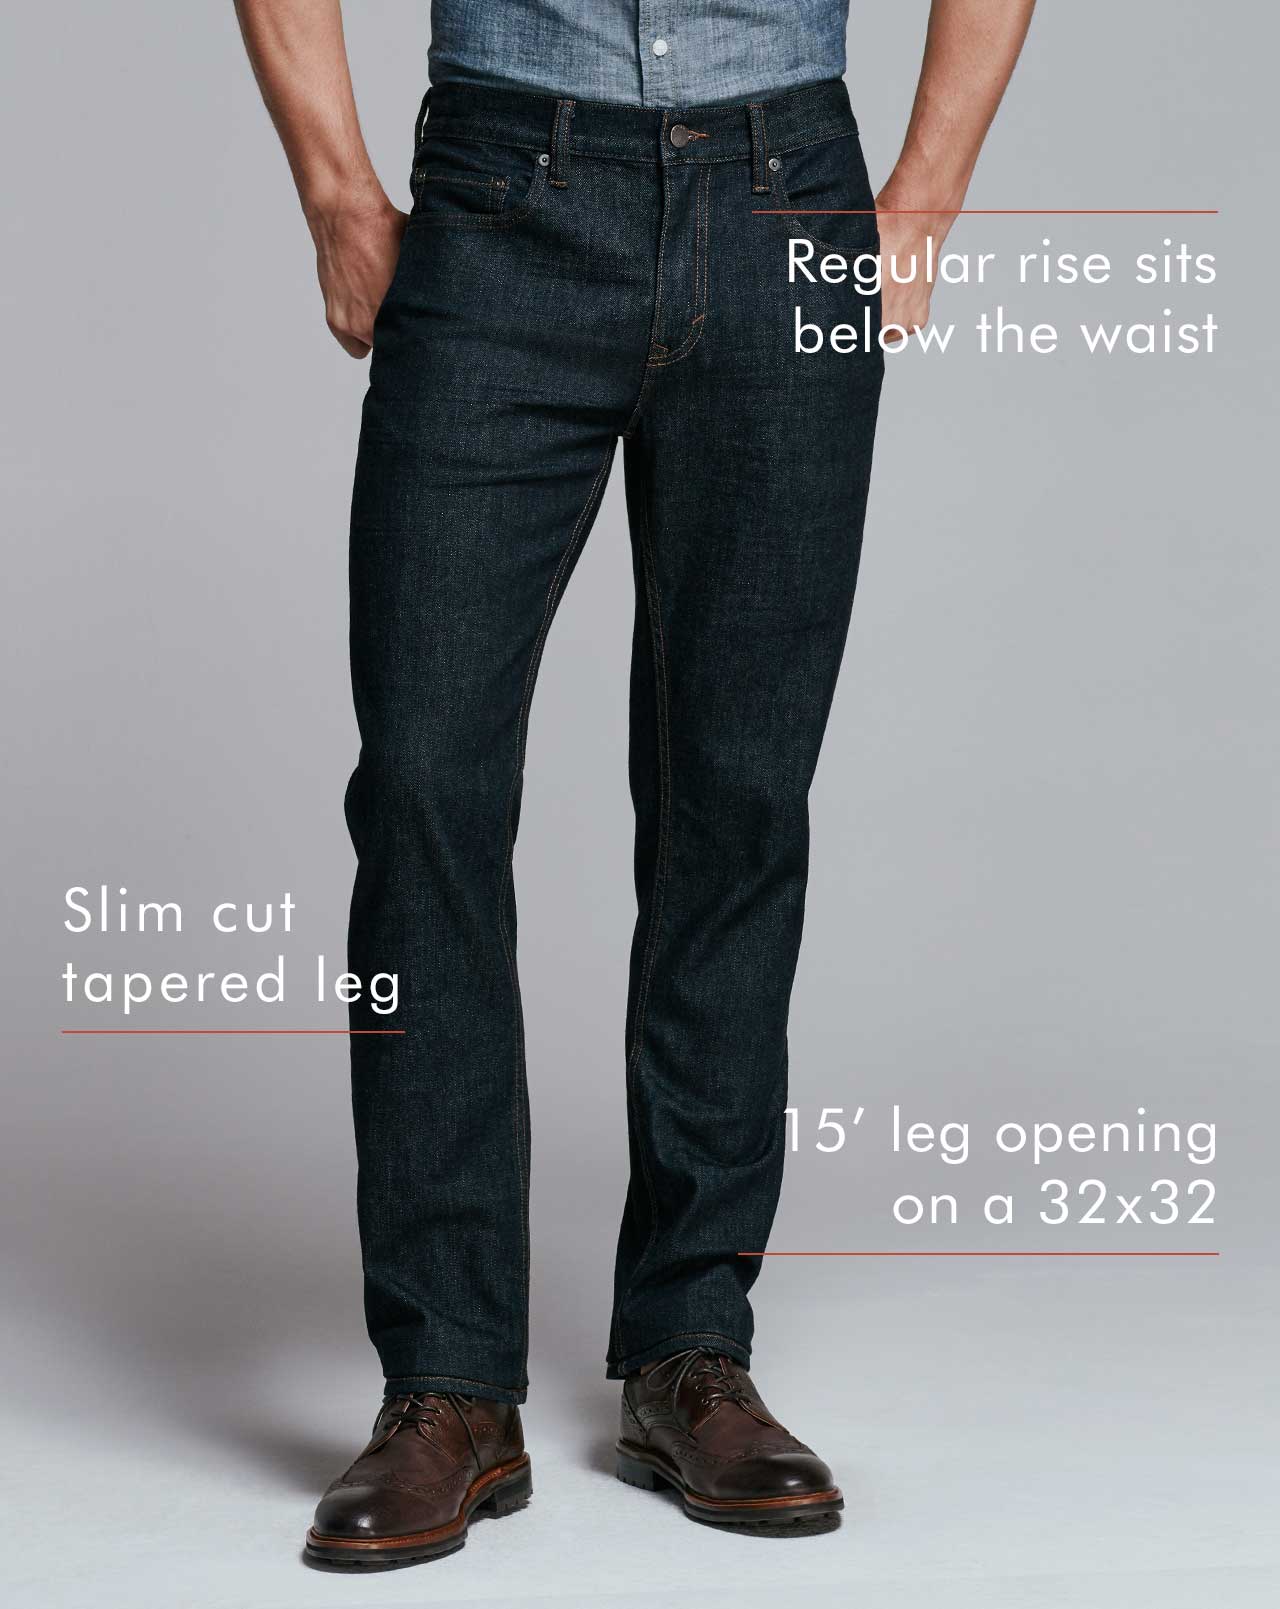 men's jeans that sit above the waist